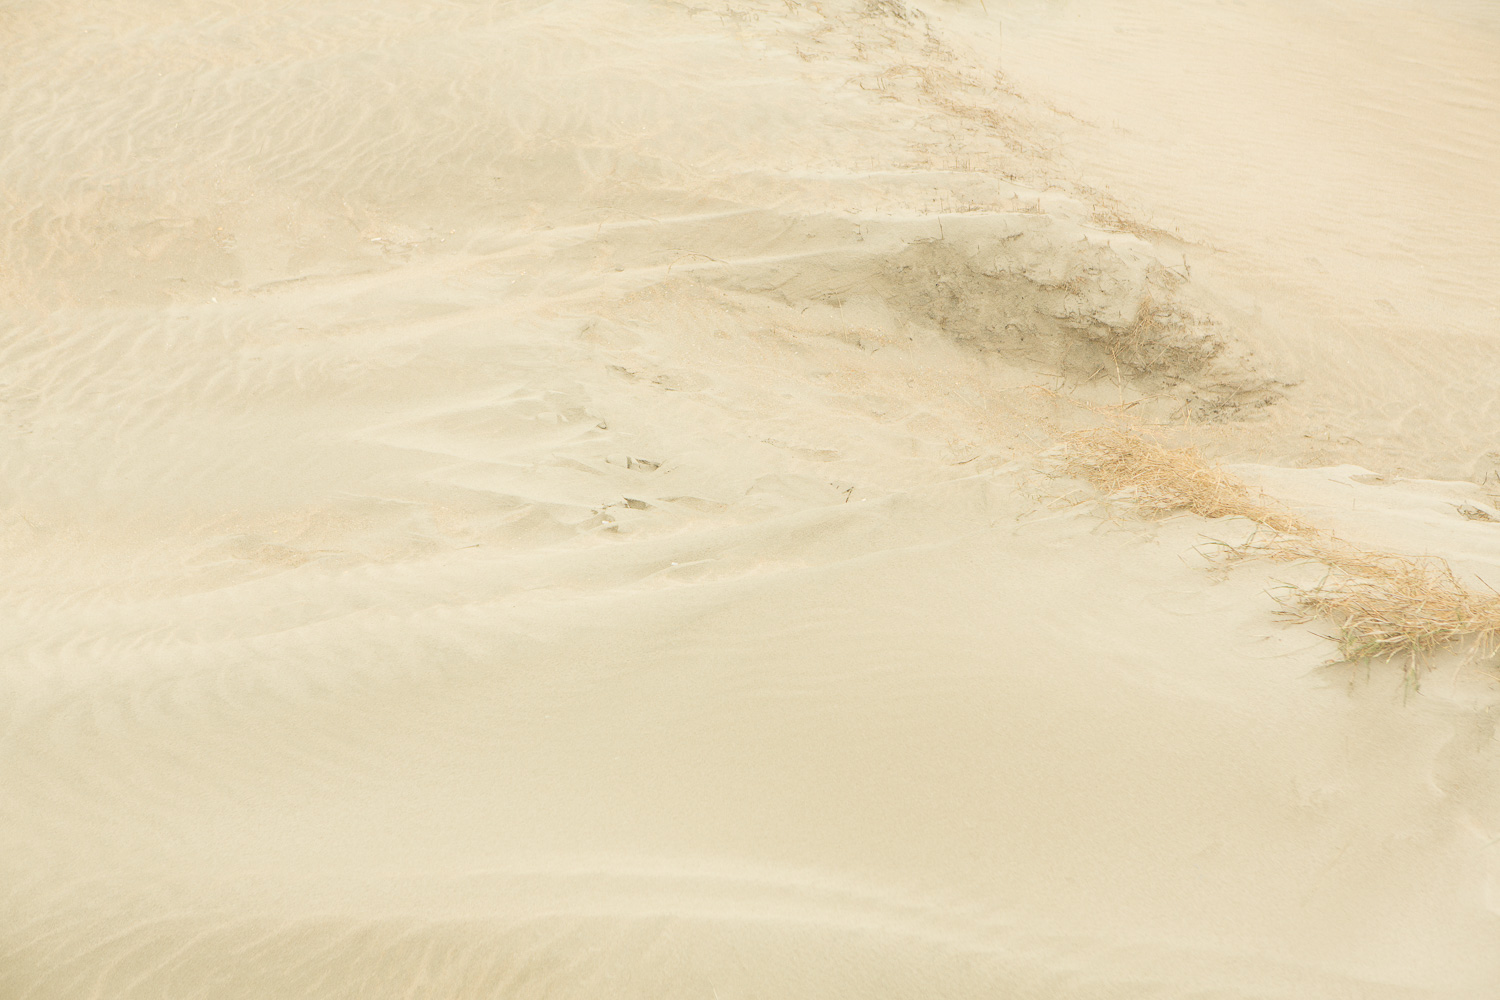  Dunes V, 2016 //  120 x 180 cm  